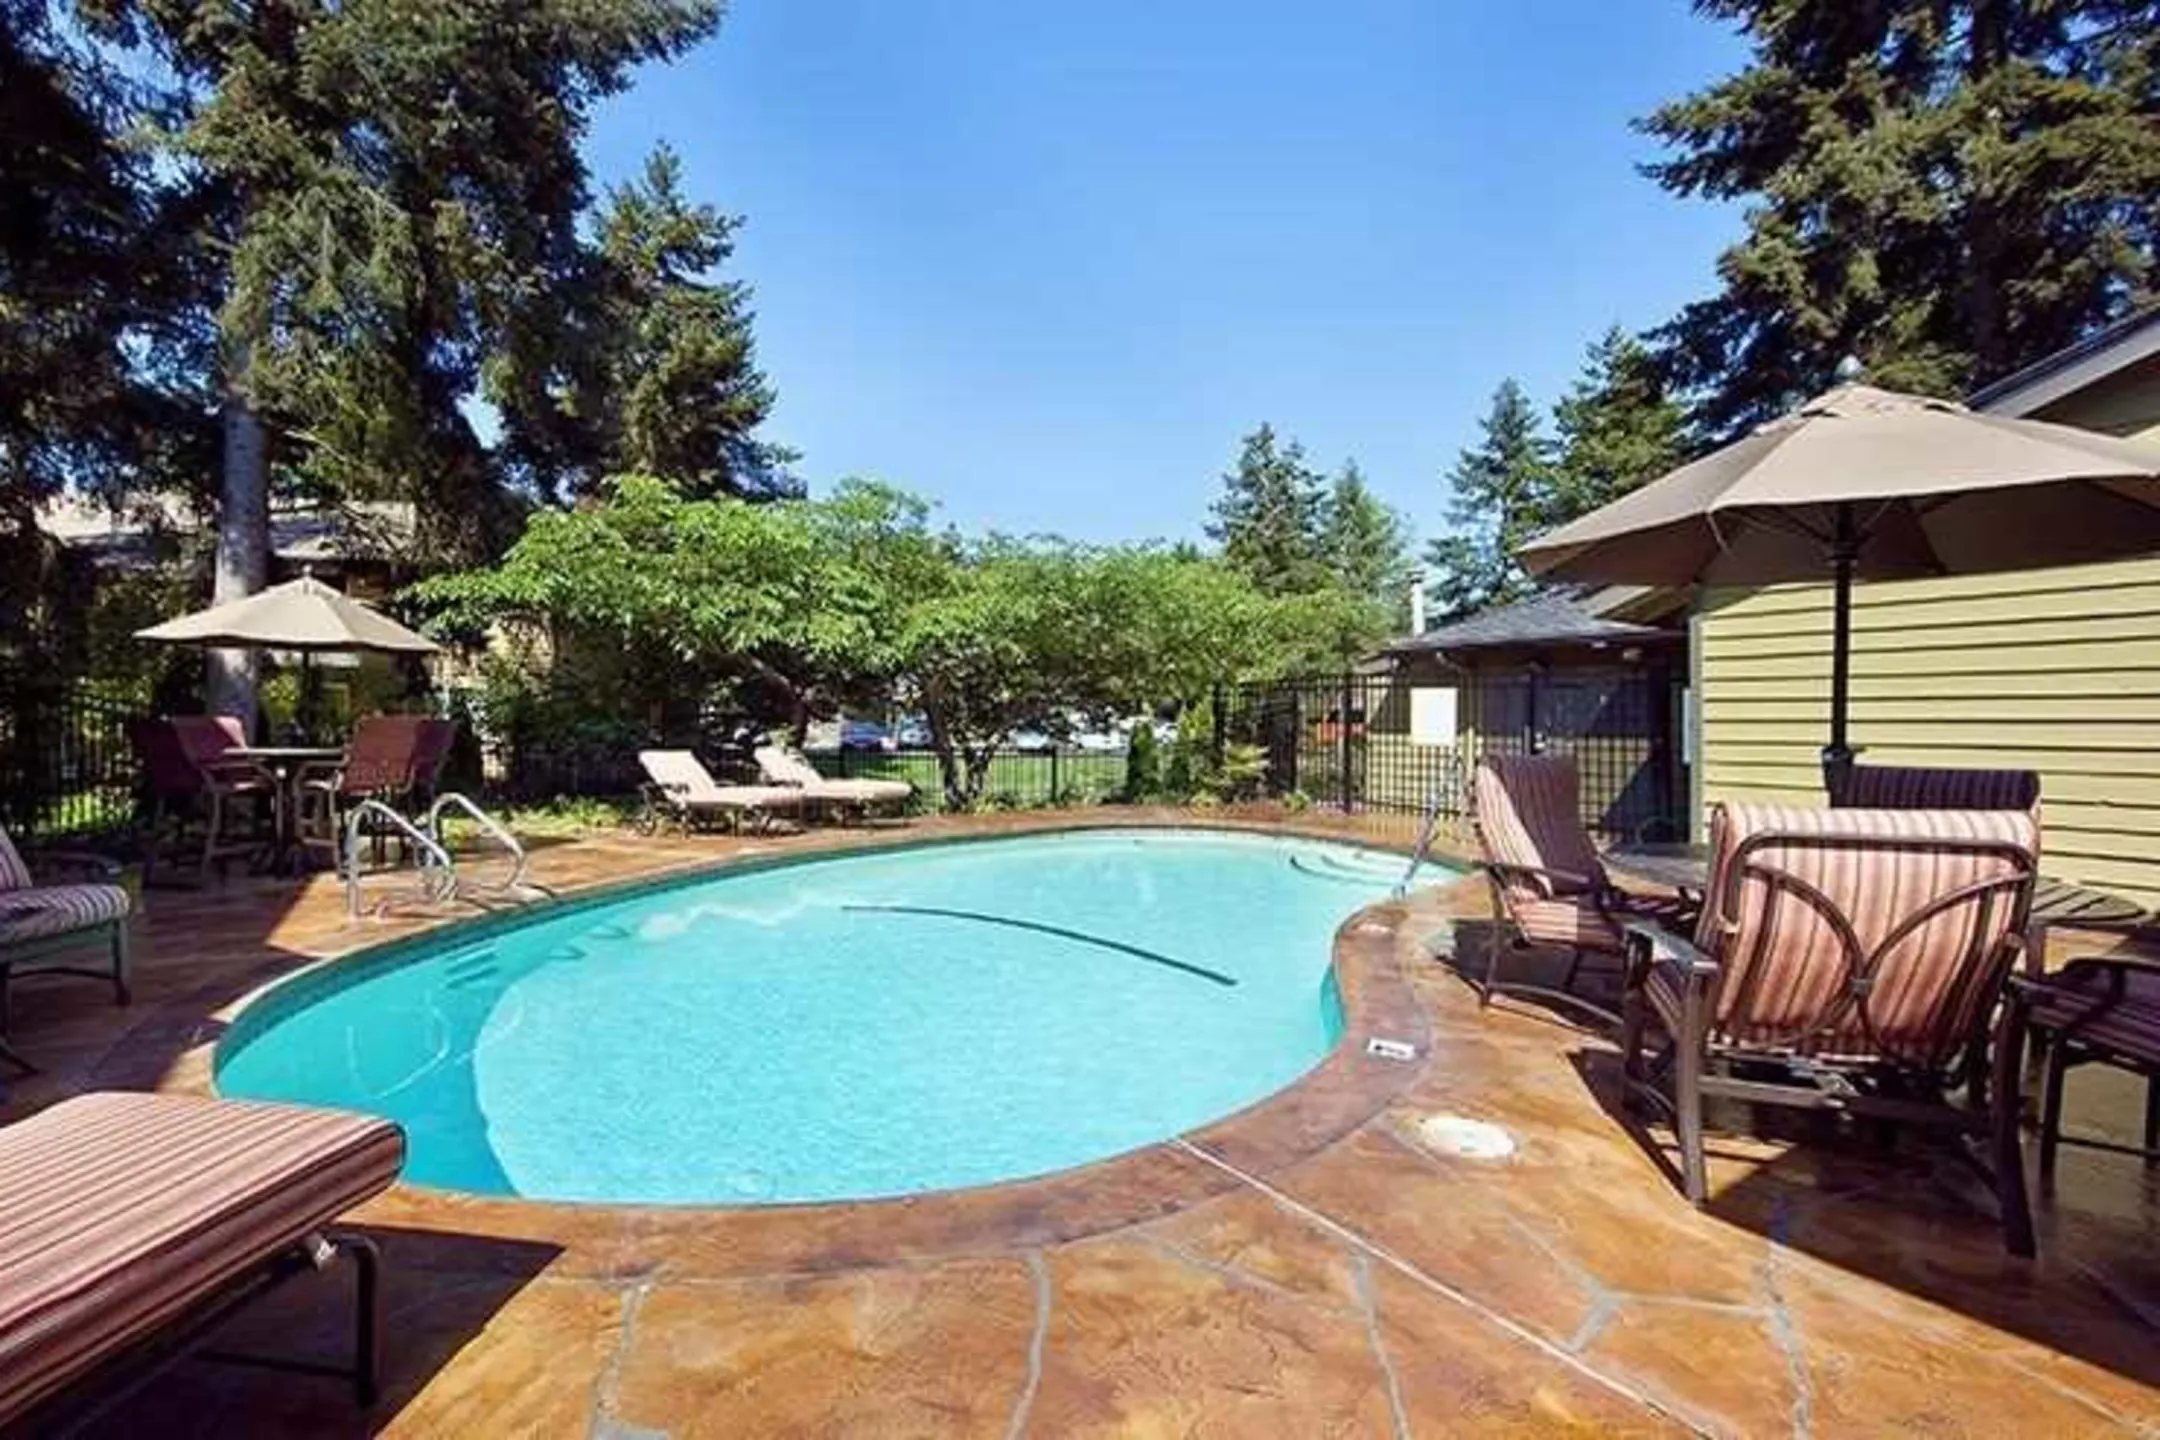 Pool - Edgewood Park Apartments - Bellevue, WA